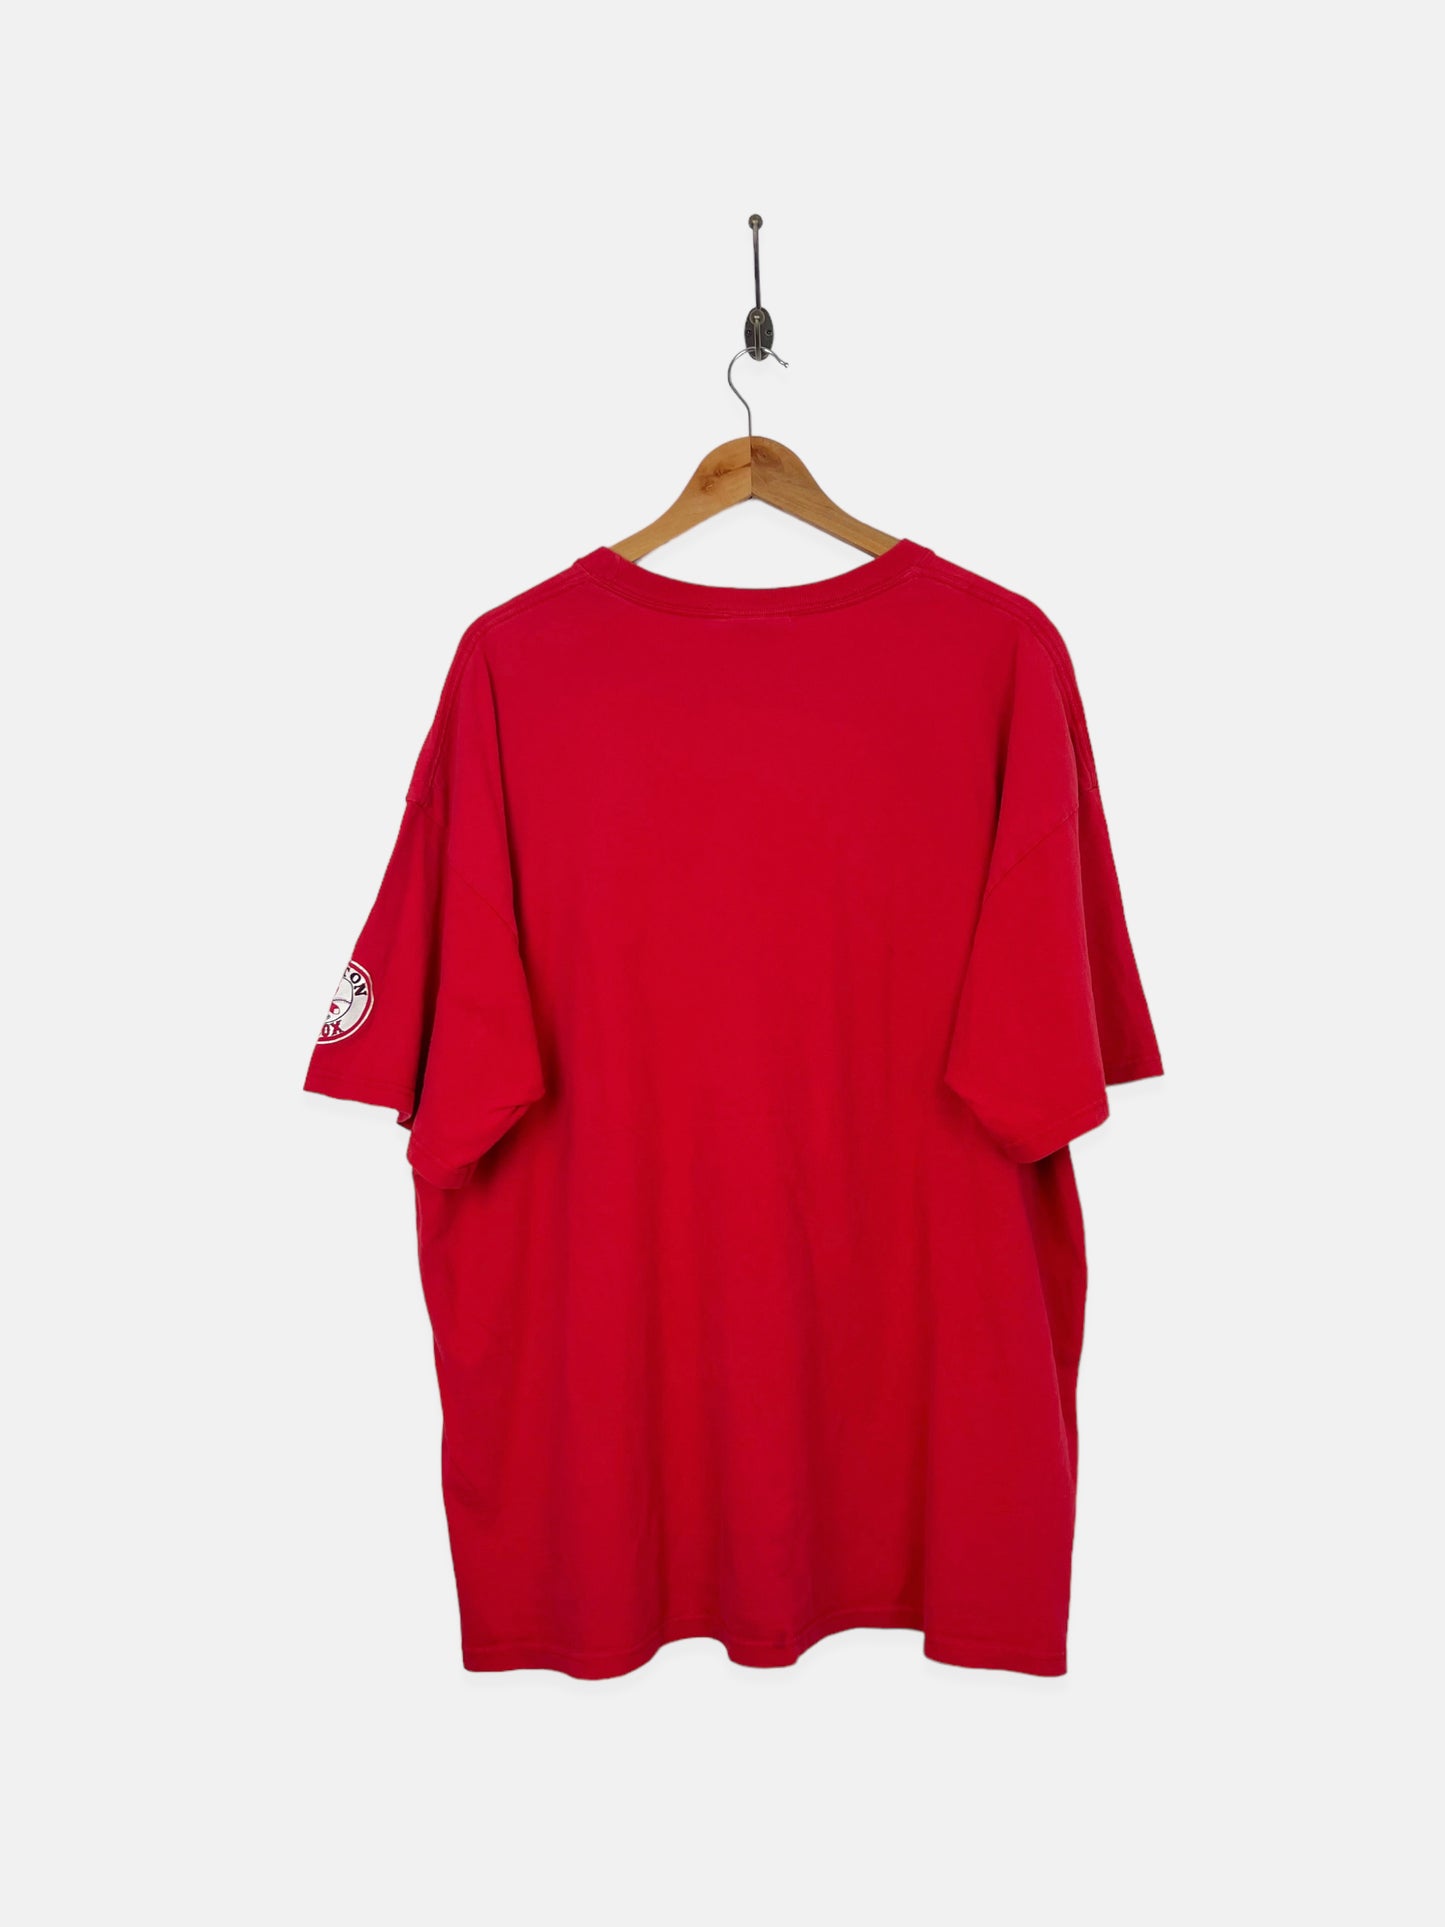 90's Nike Boston Red Sox MLB Vintage T-Shirt Size 2XL